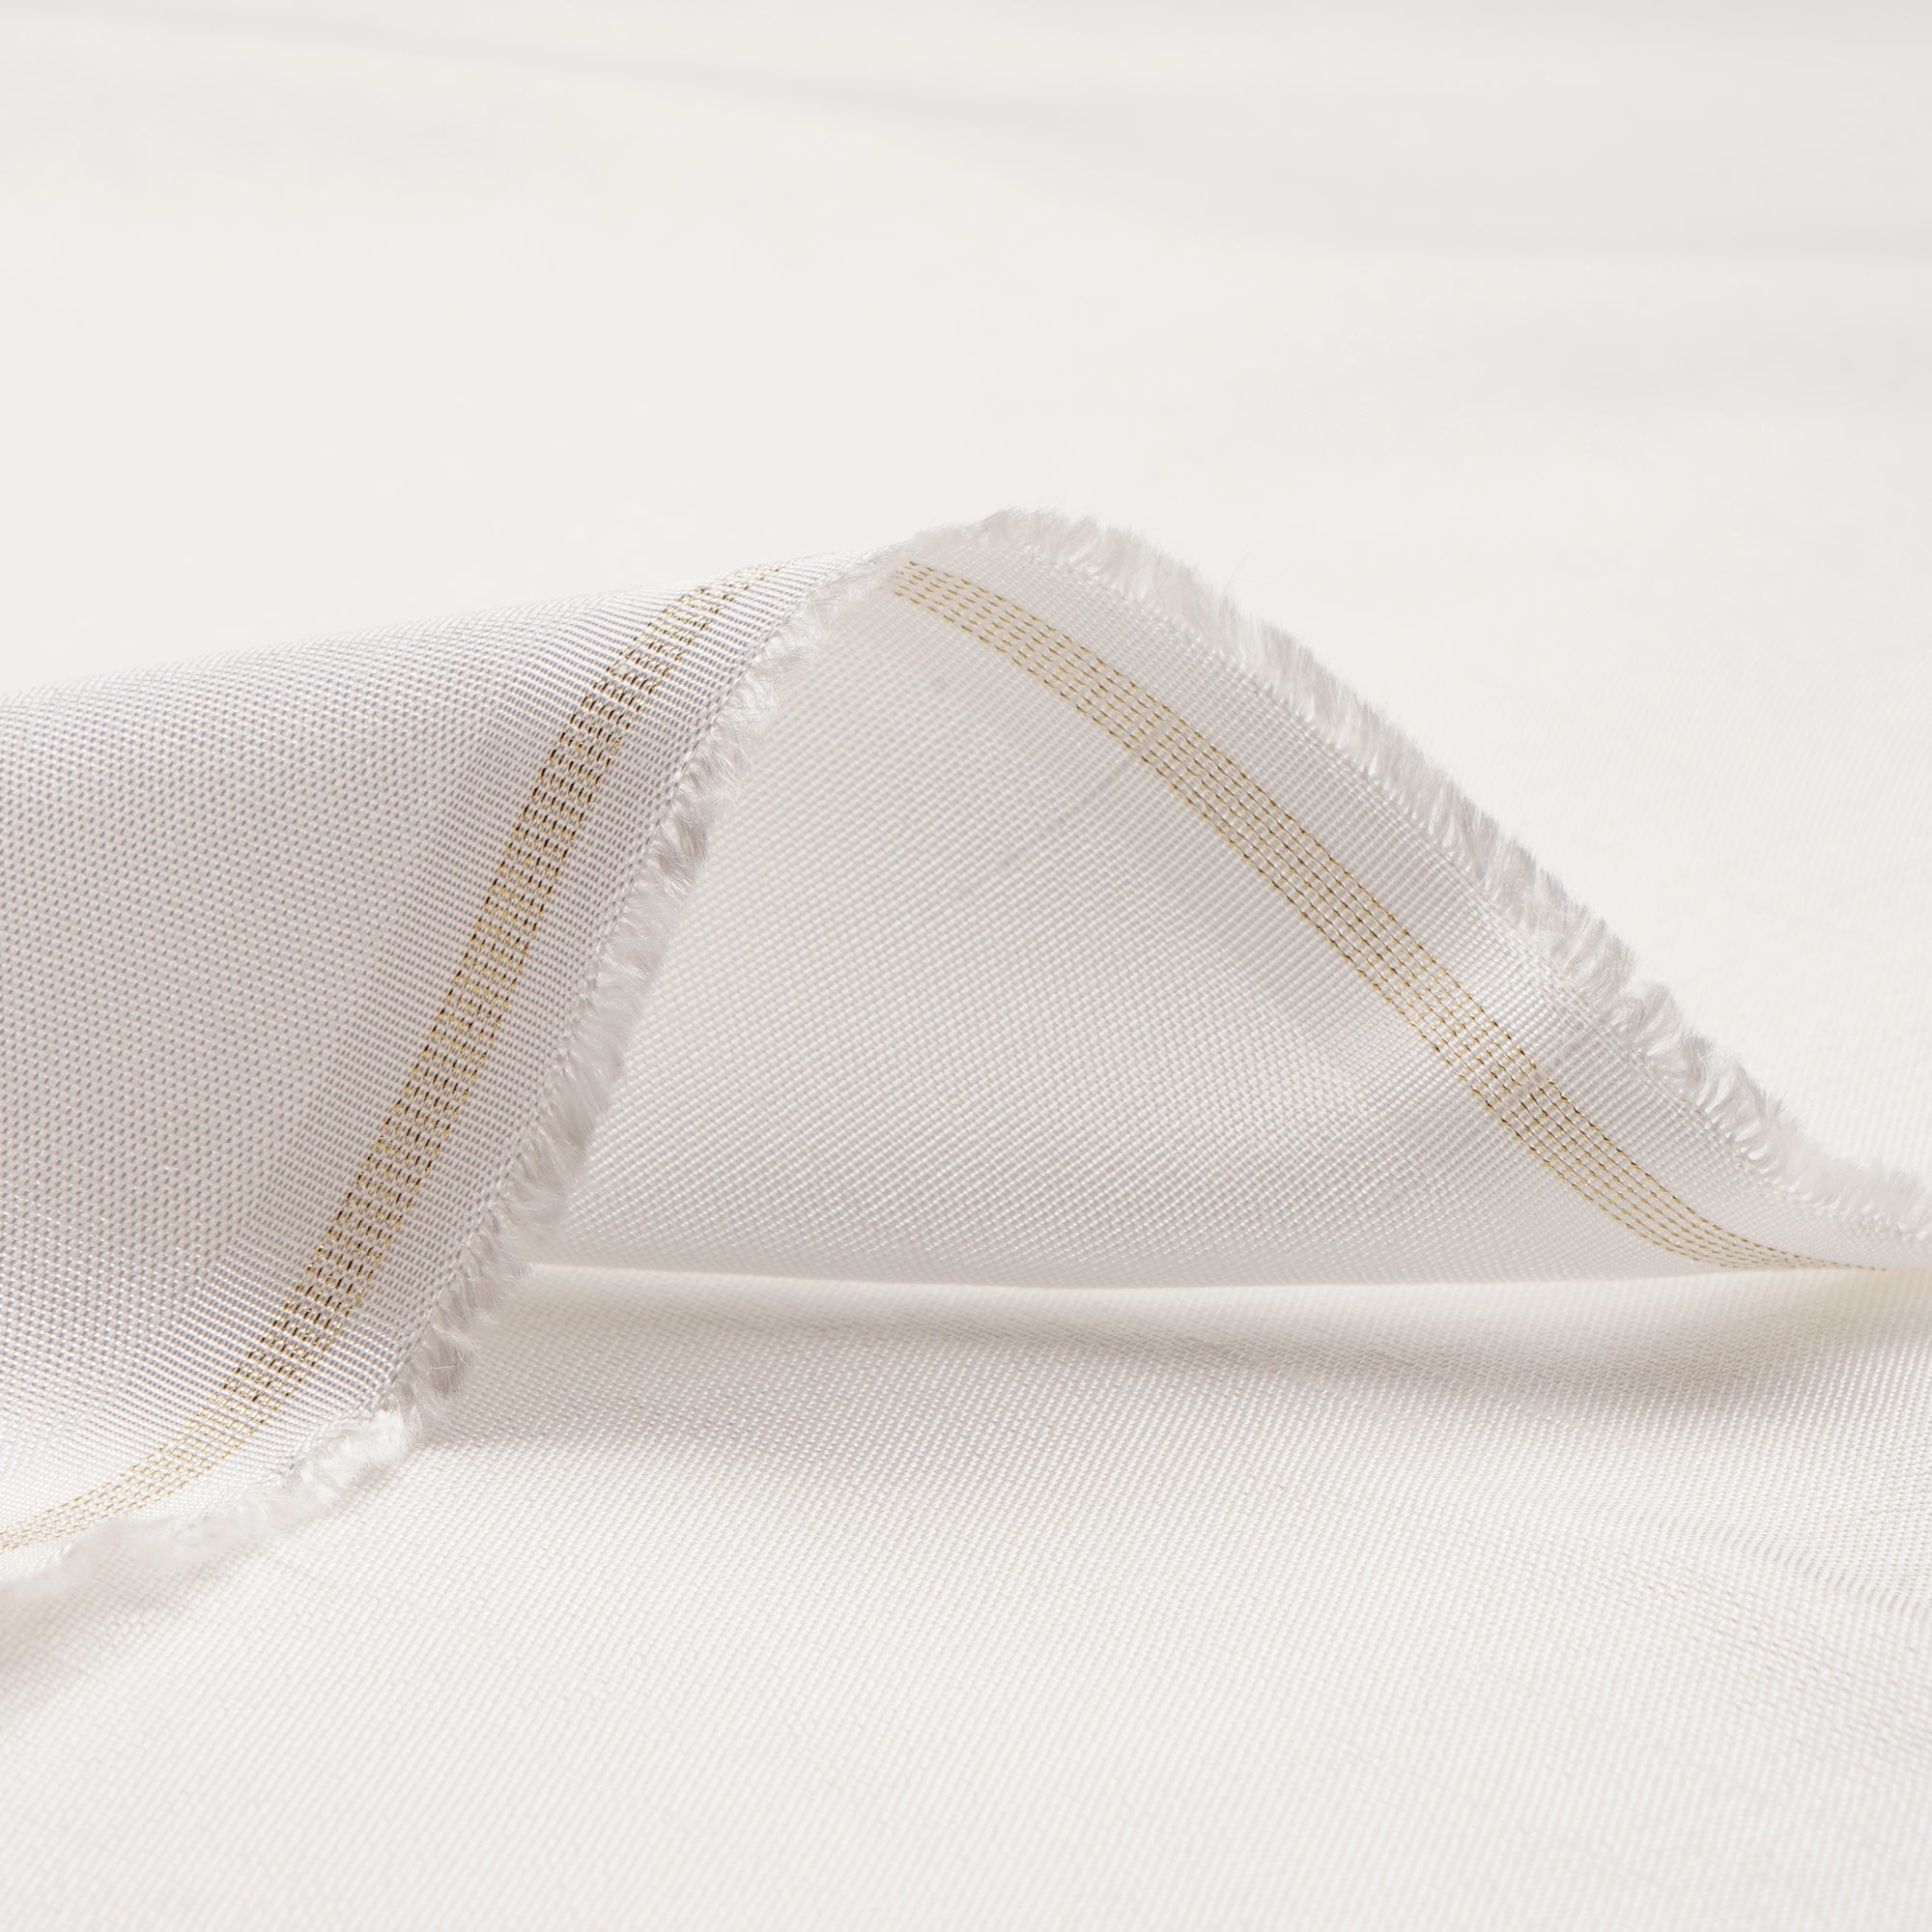 White Dyebale Viscose Satin Fabric